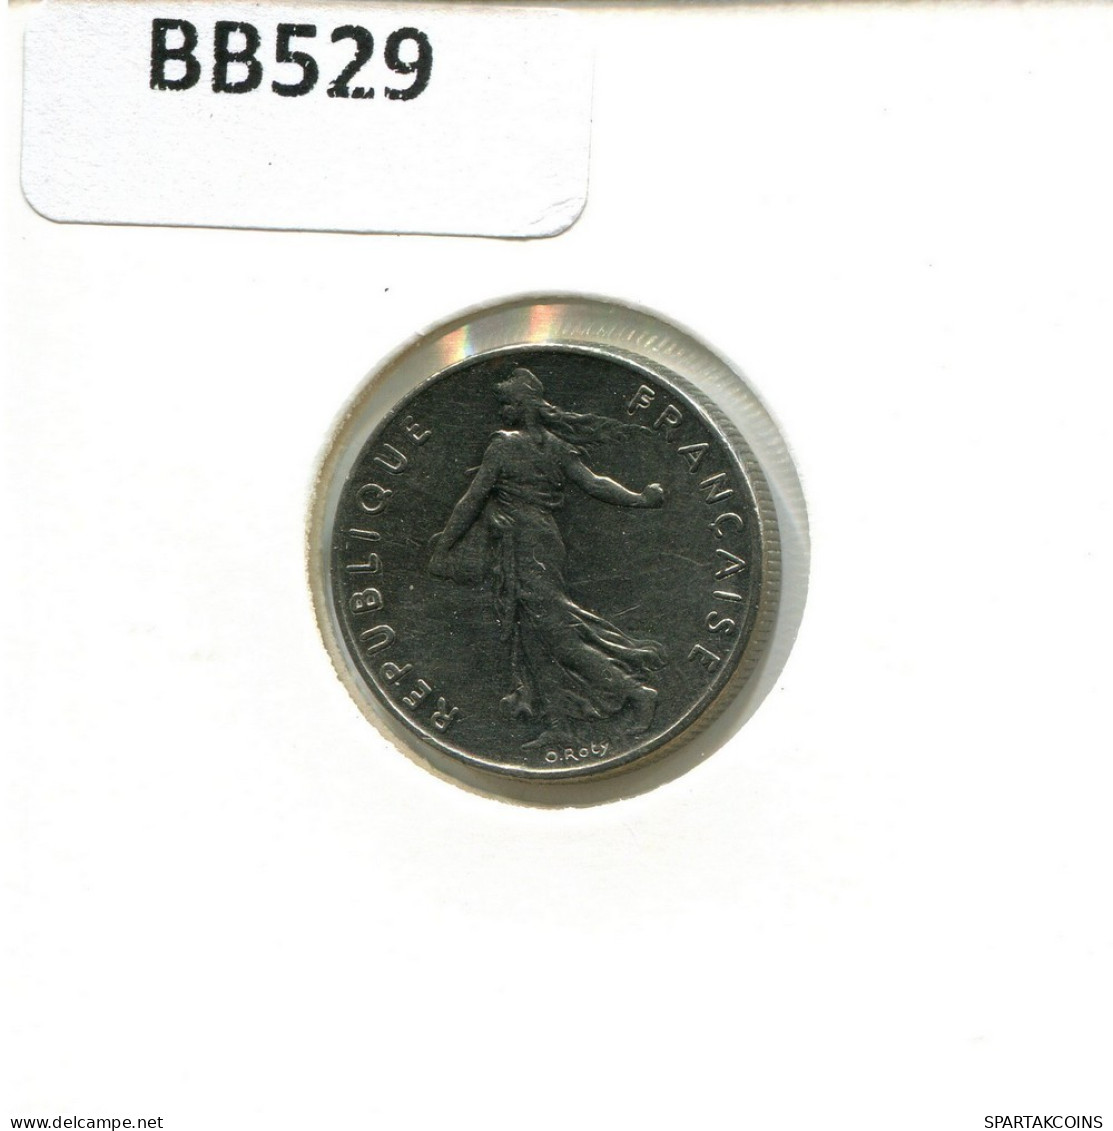 1/2 FRANC 1978 FRANKREICH FRANCE Französisch Münze #BB529.D.A - 1/2 Franc